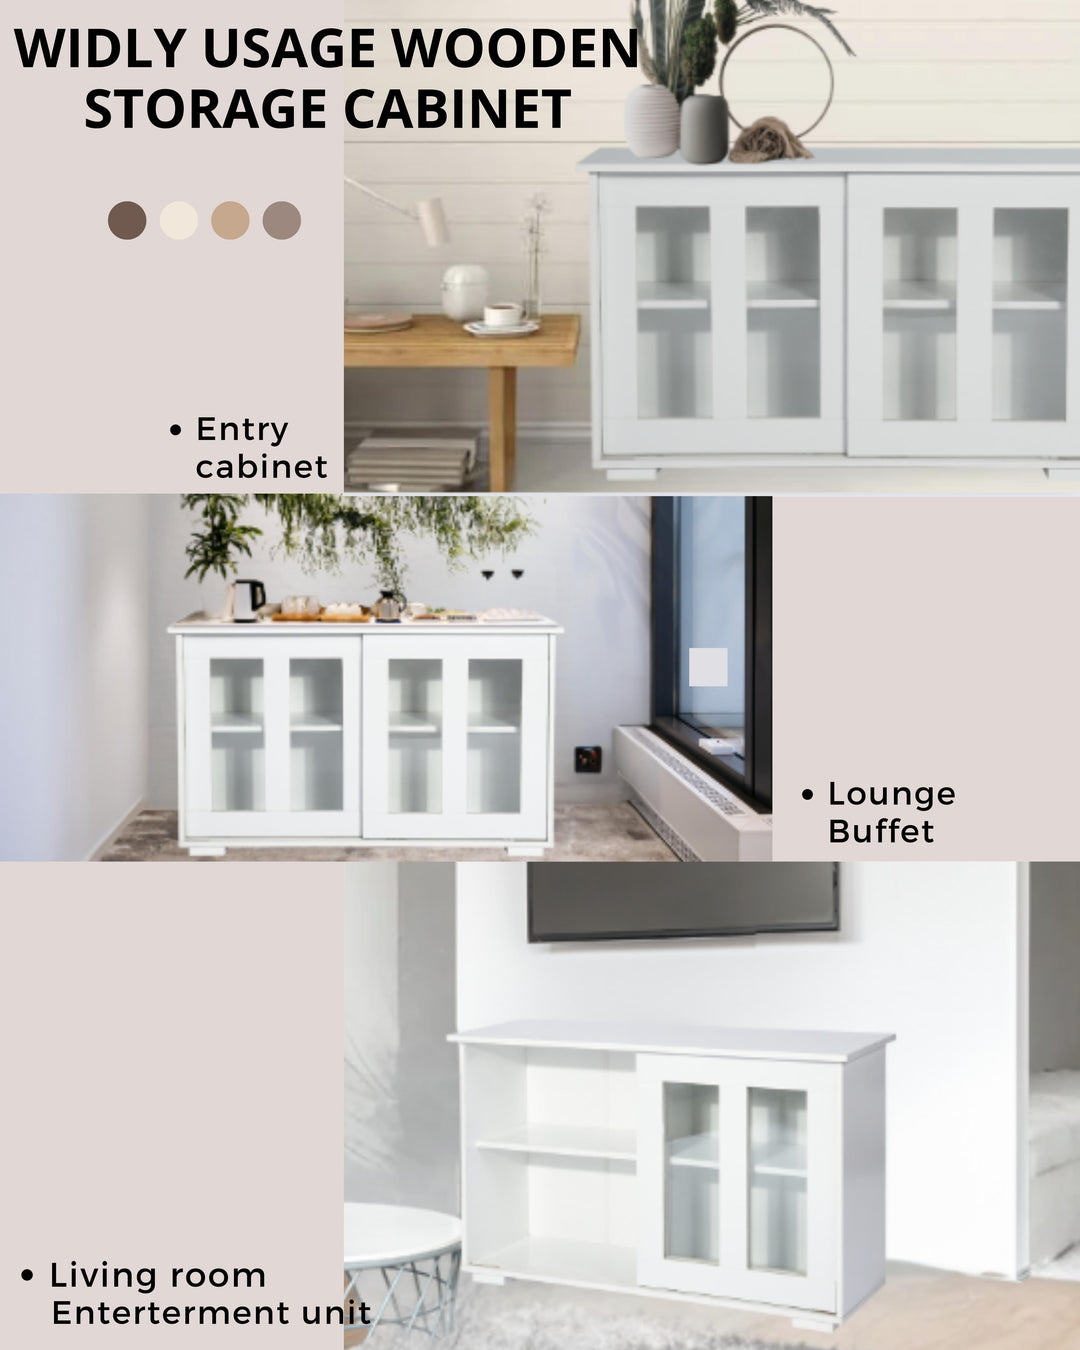 Furniture R Versatile White Buffet Sliding Door Sideboard With Adjustable Shelves